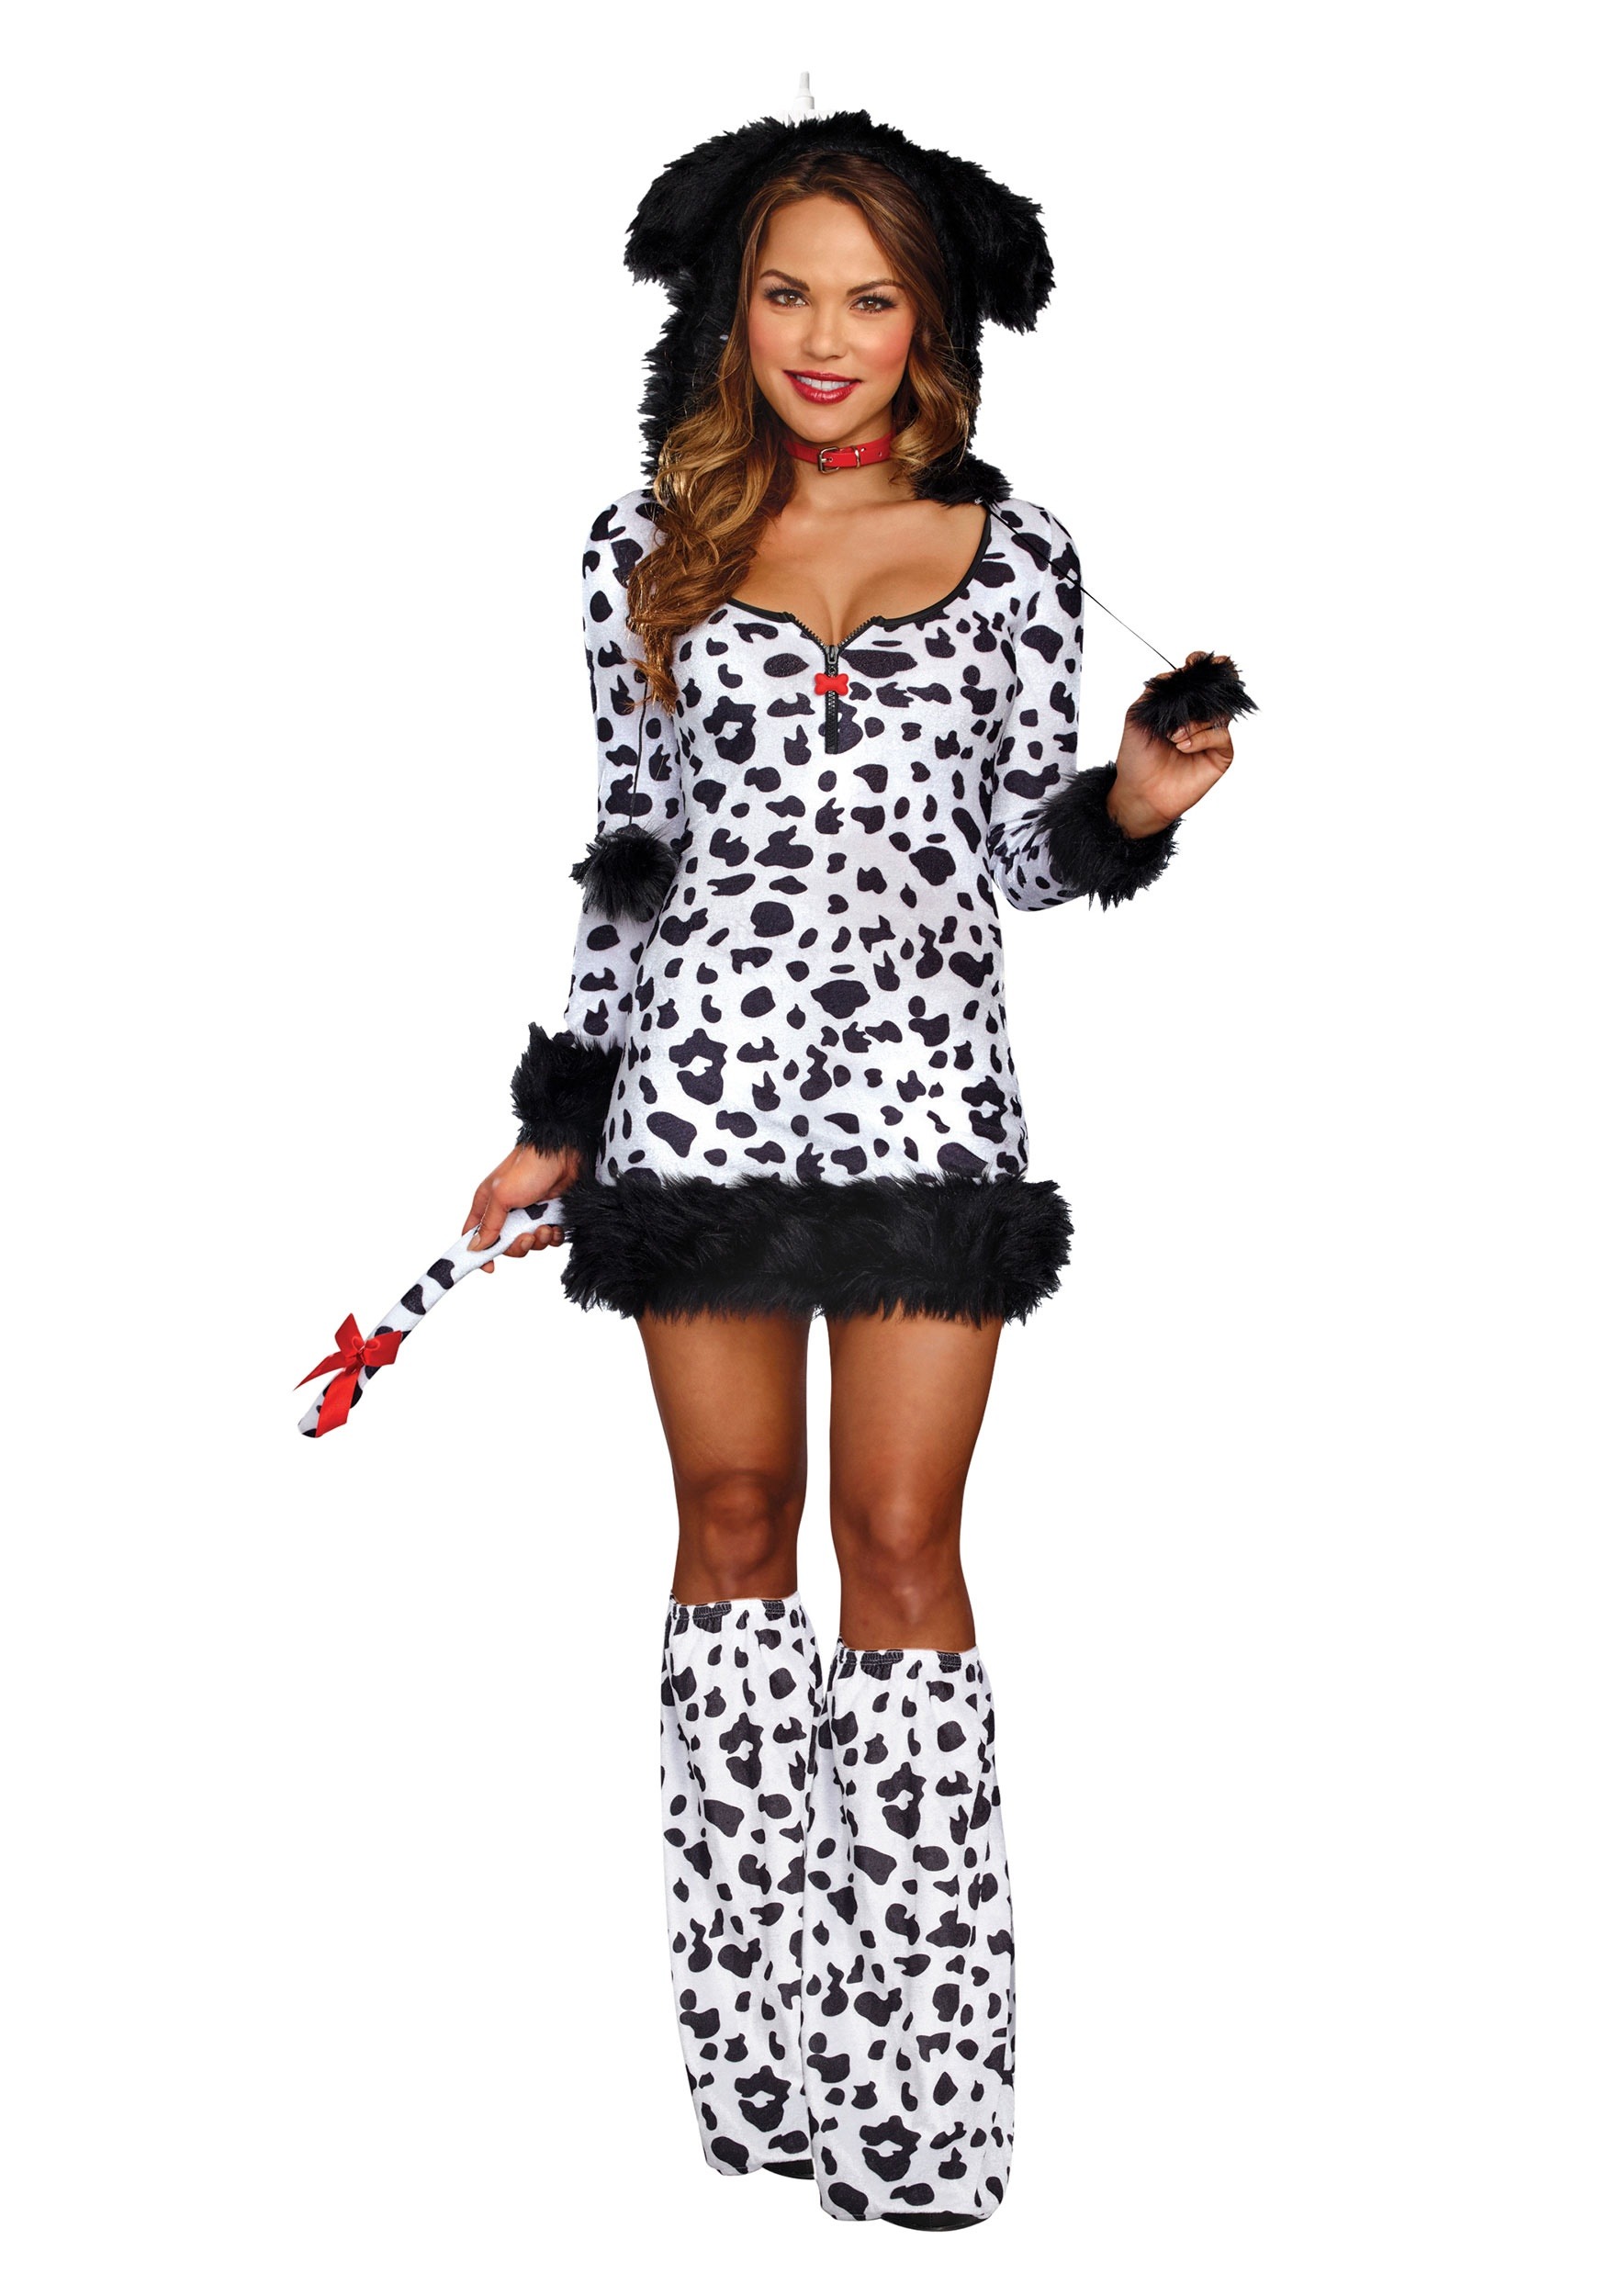 Women’s Darling Dalmatian Costume